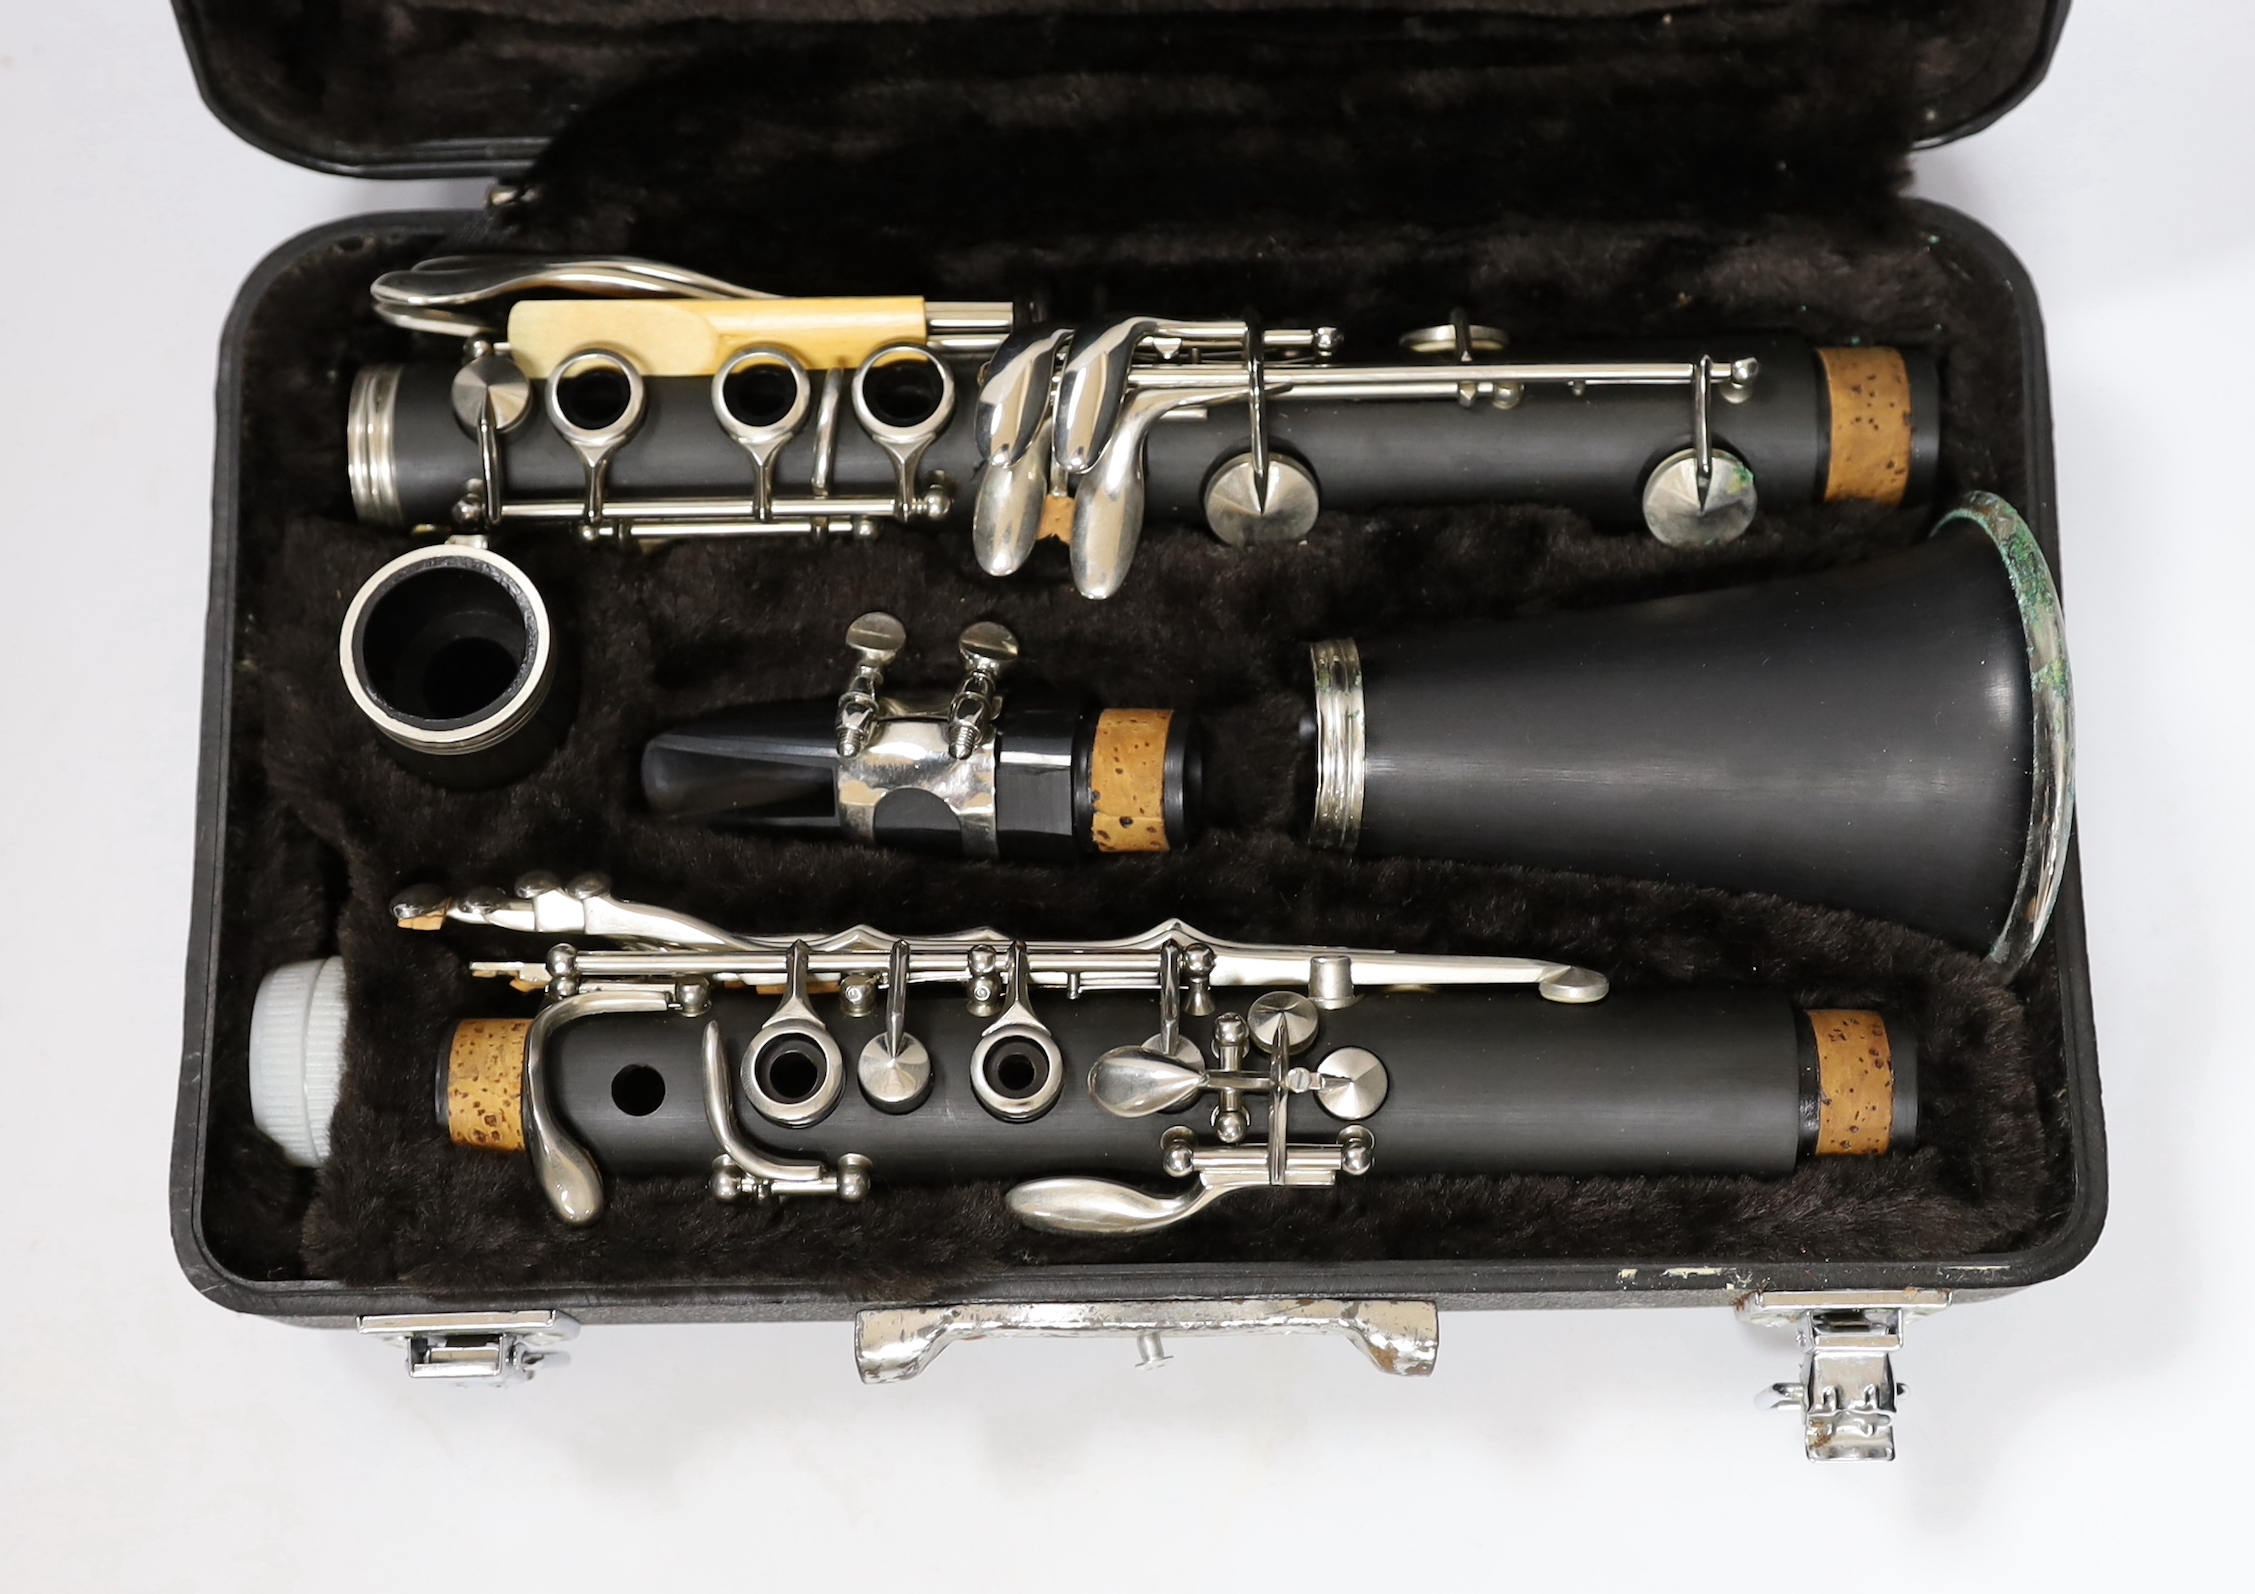 A cased Lindo clarinet